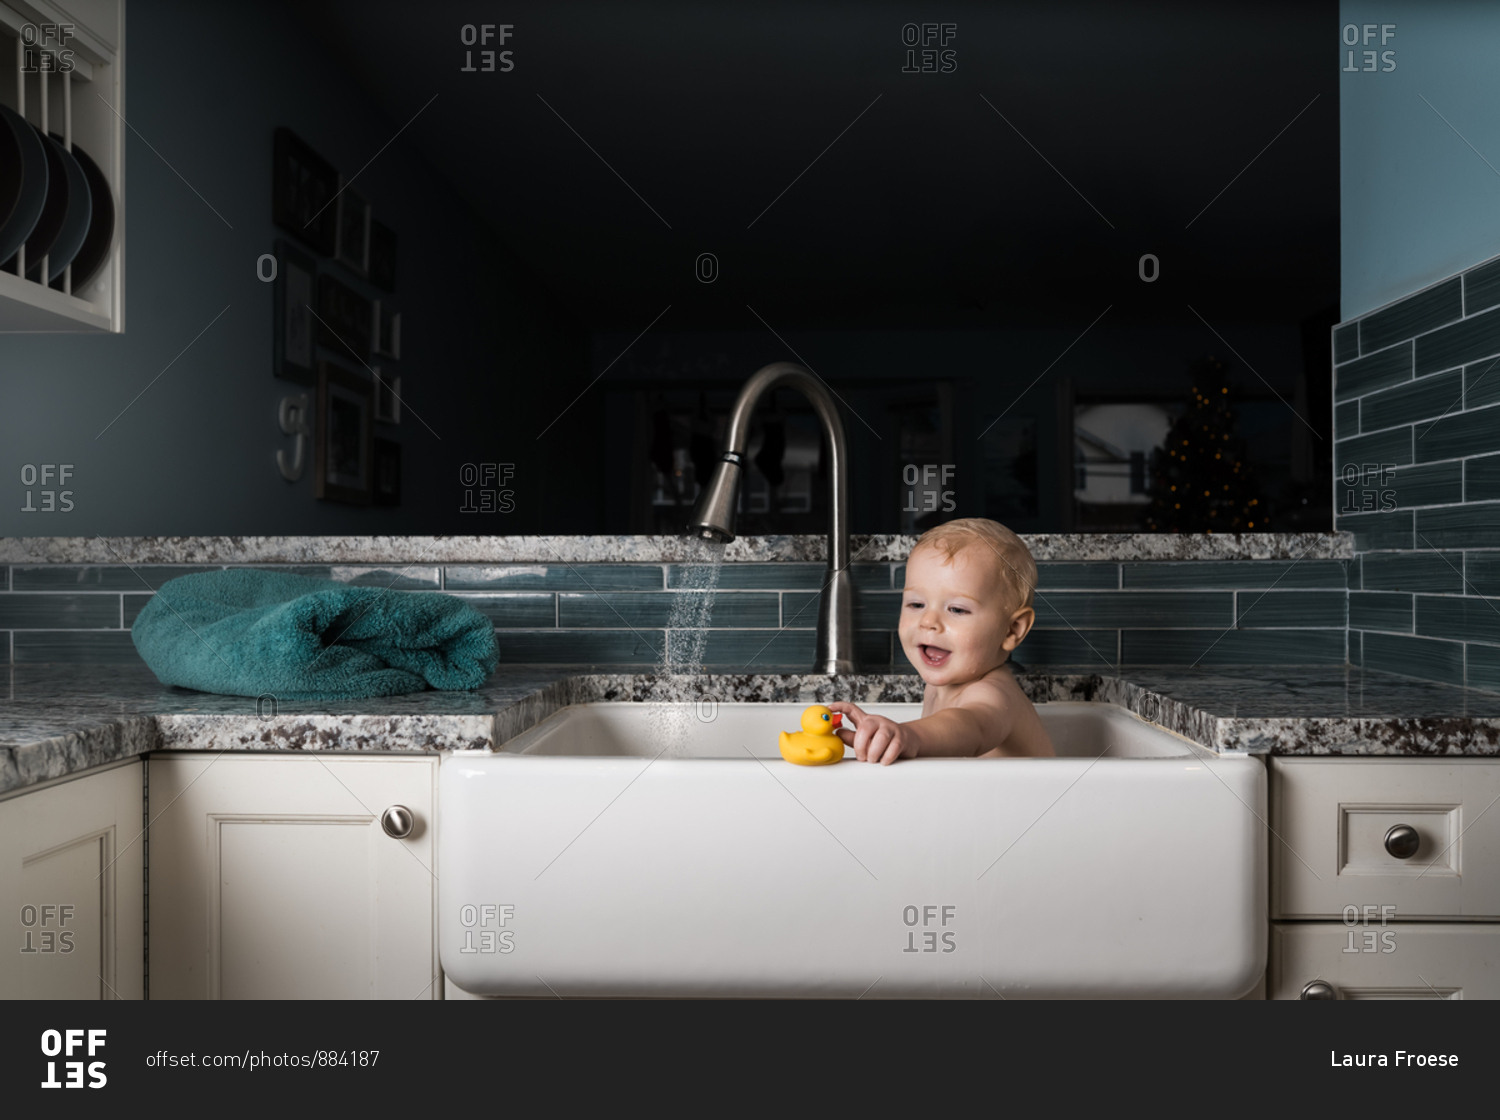 Baby taking bath in kitchen sink with rubber duck